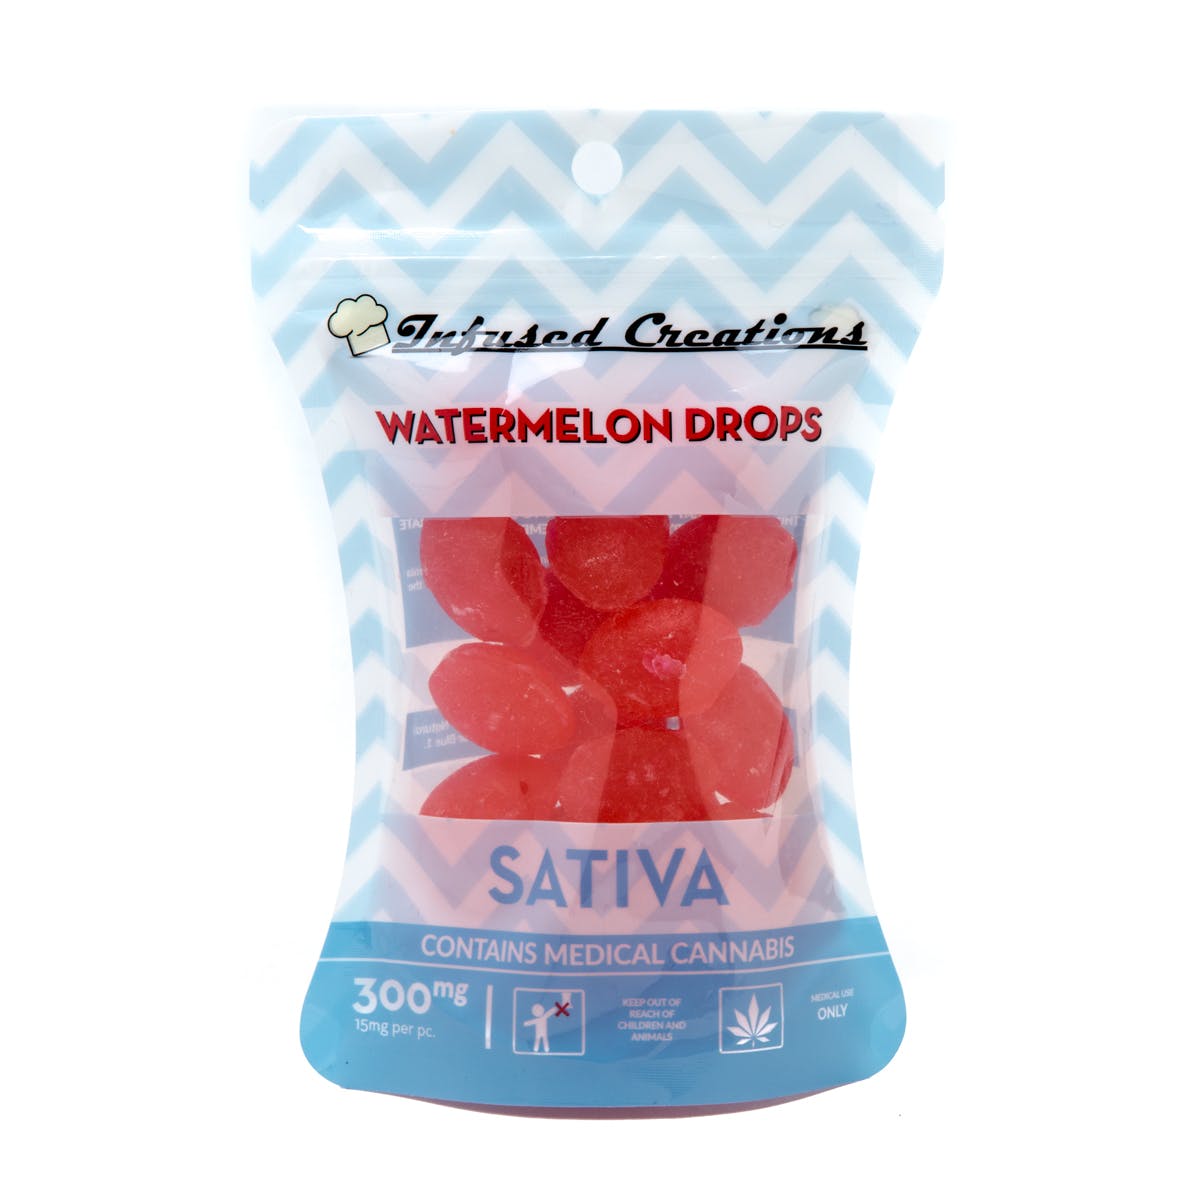 Watermelon Drops Sativa, 300mg